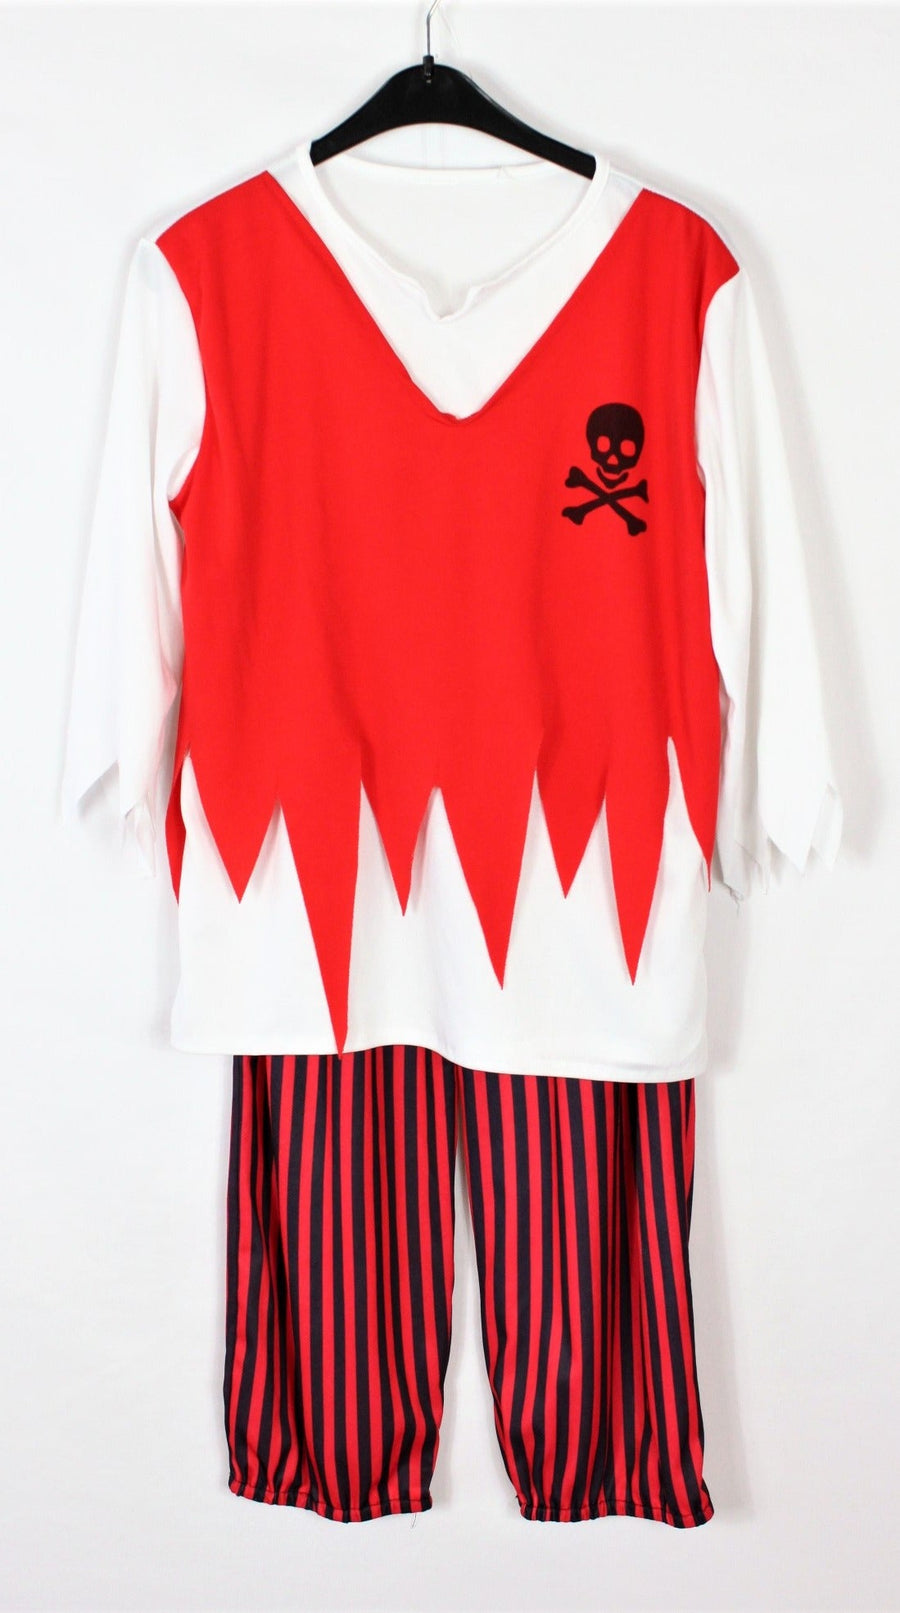 Kostüm - Pirat - 128 - rot/schwarz/weiß